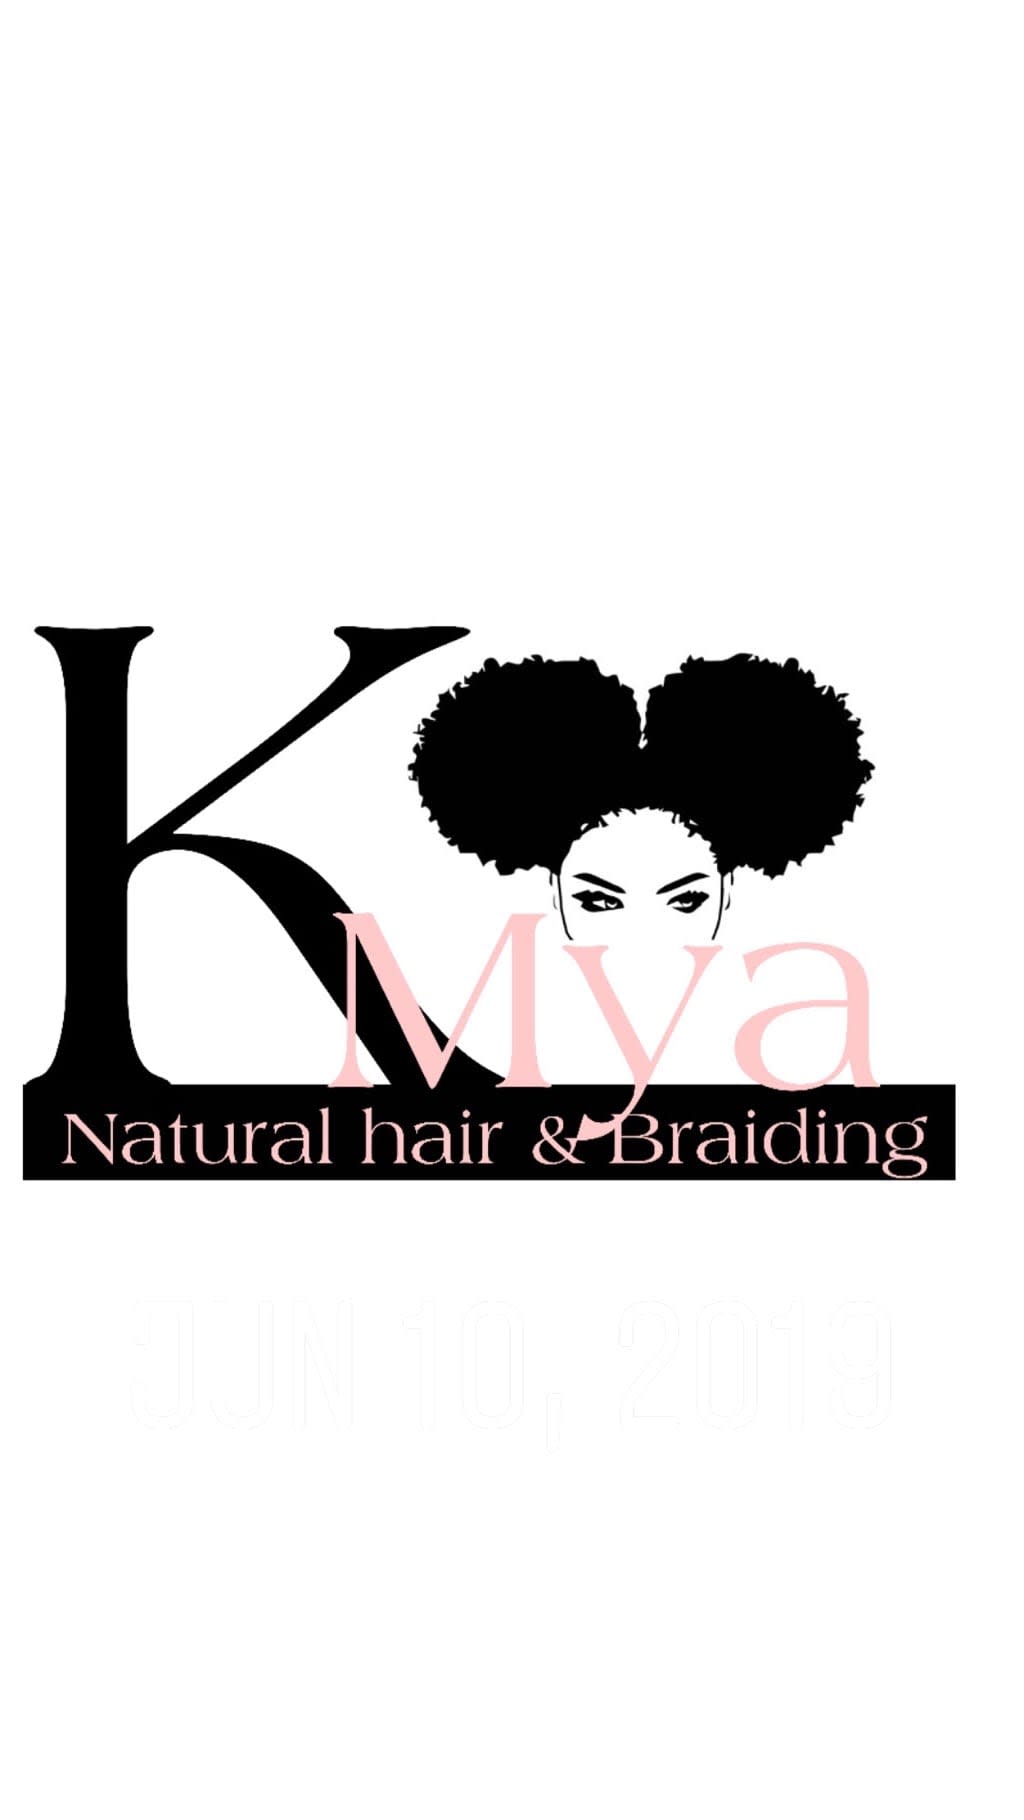 Queen KaMya Natural Hair and Braiding